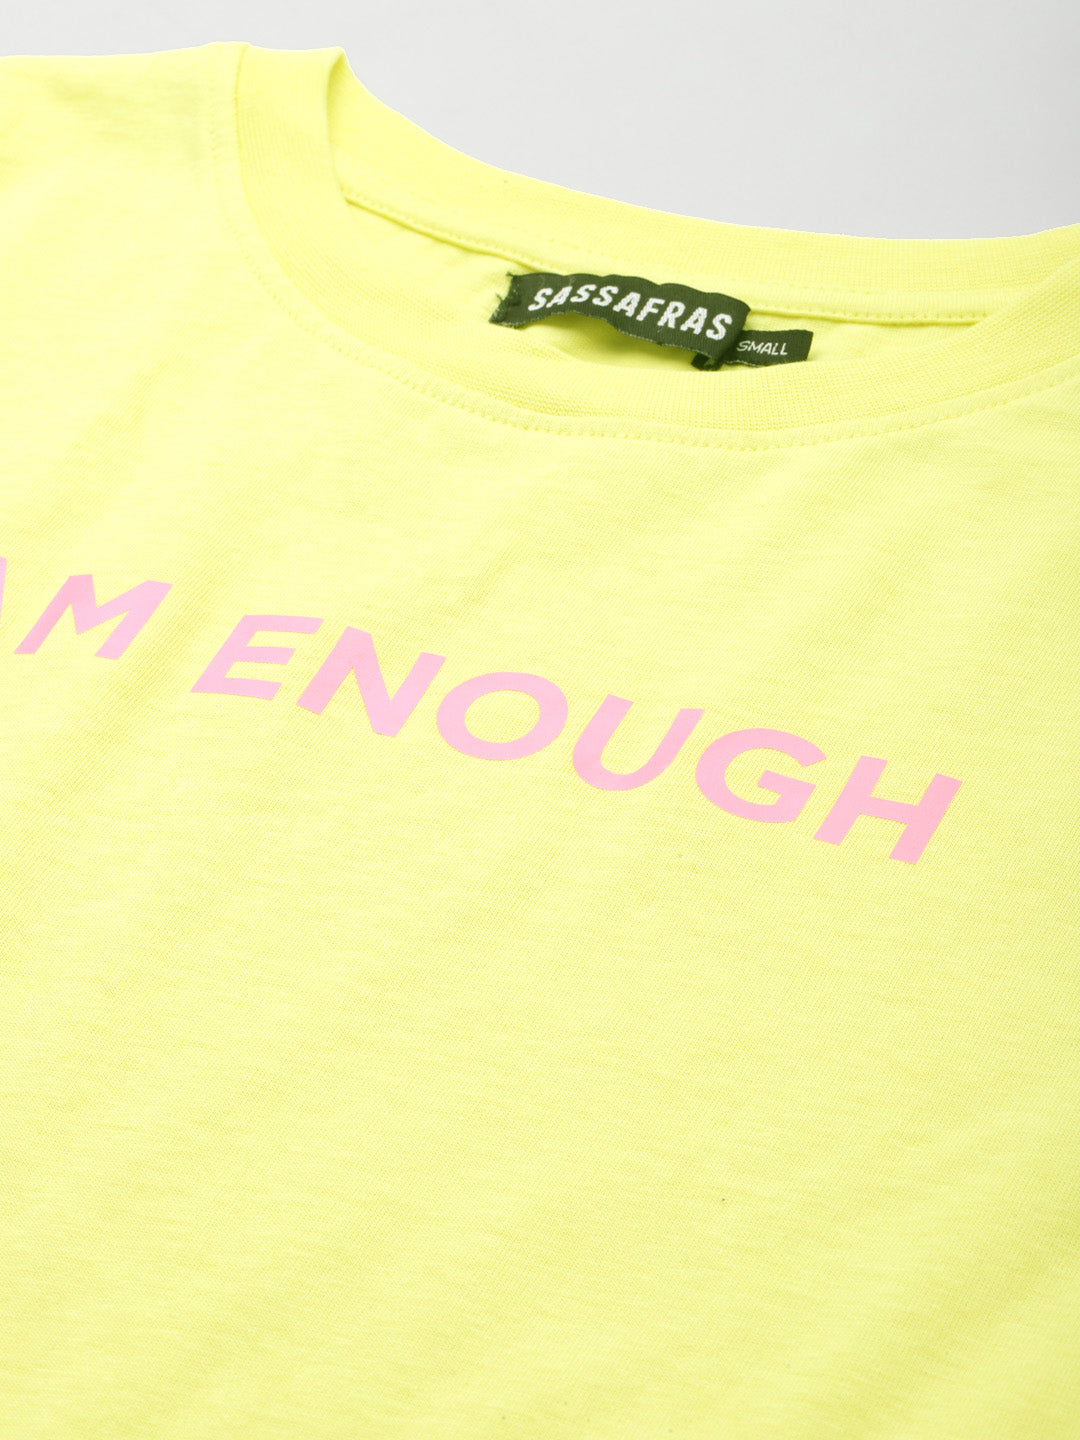 Women Yellow I-Am-Enough Crop Boxy T-Shirt